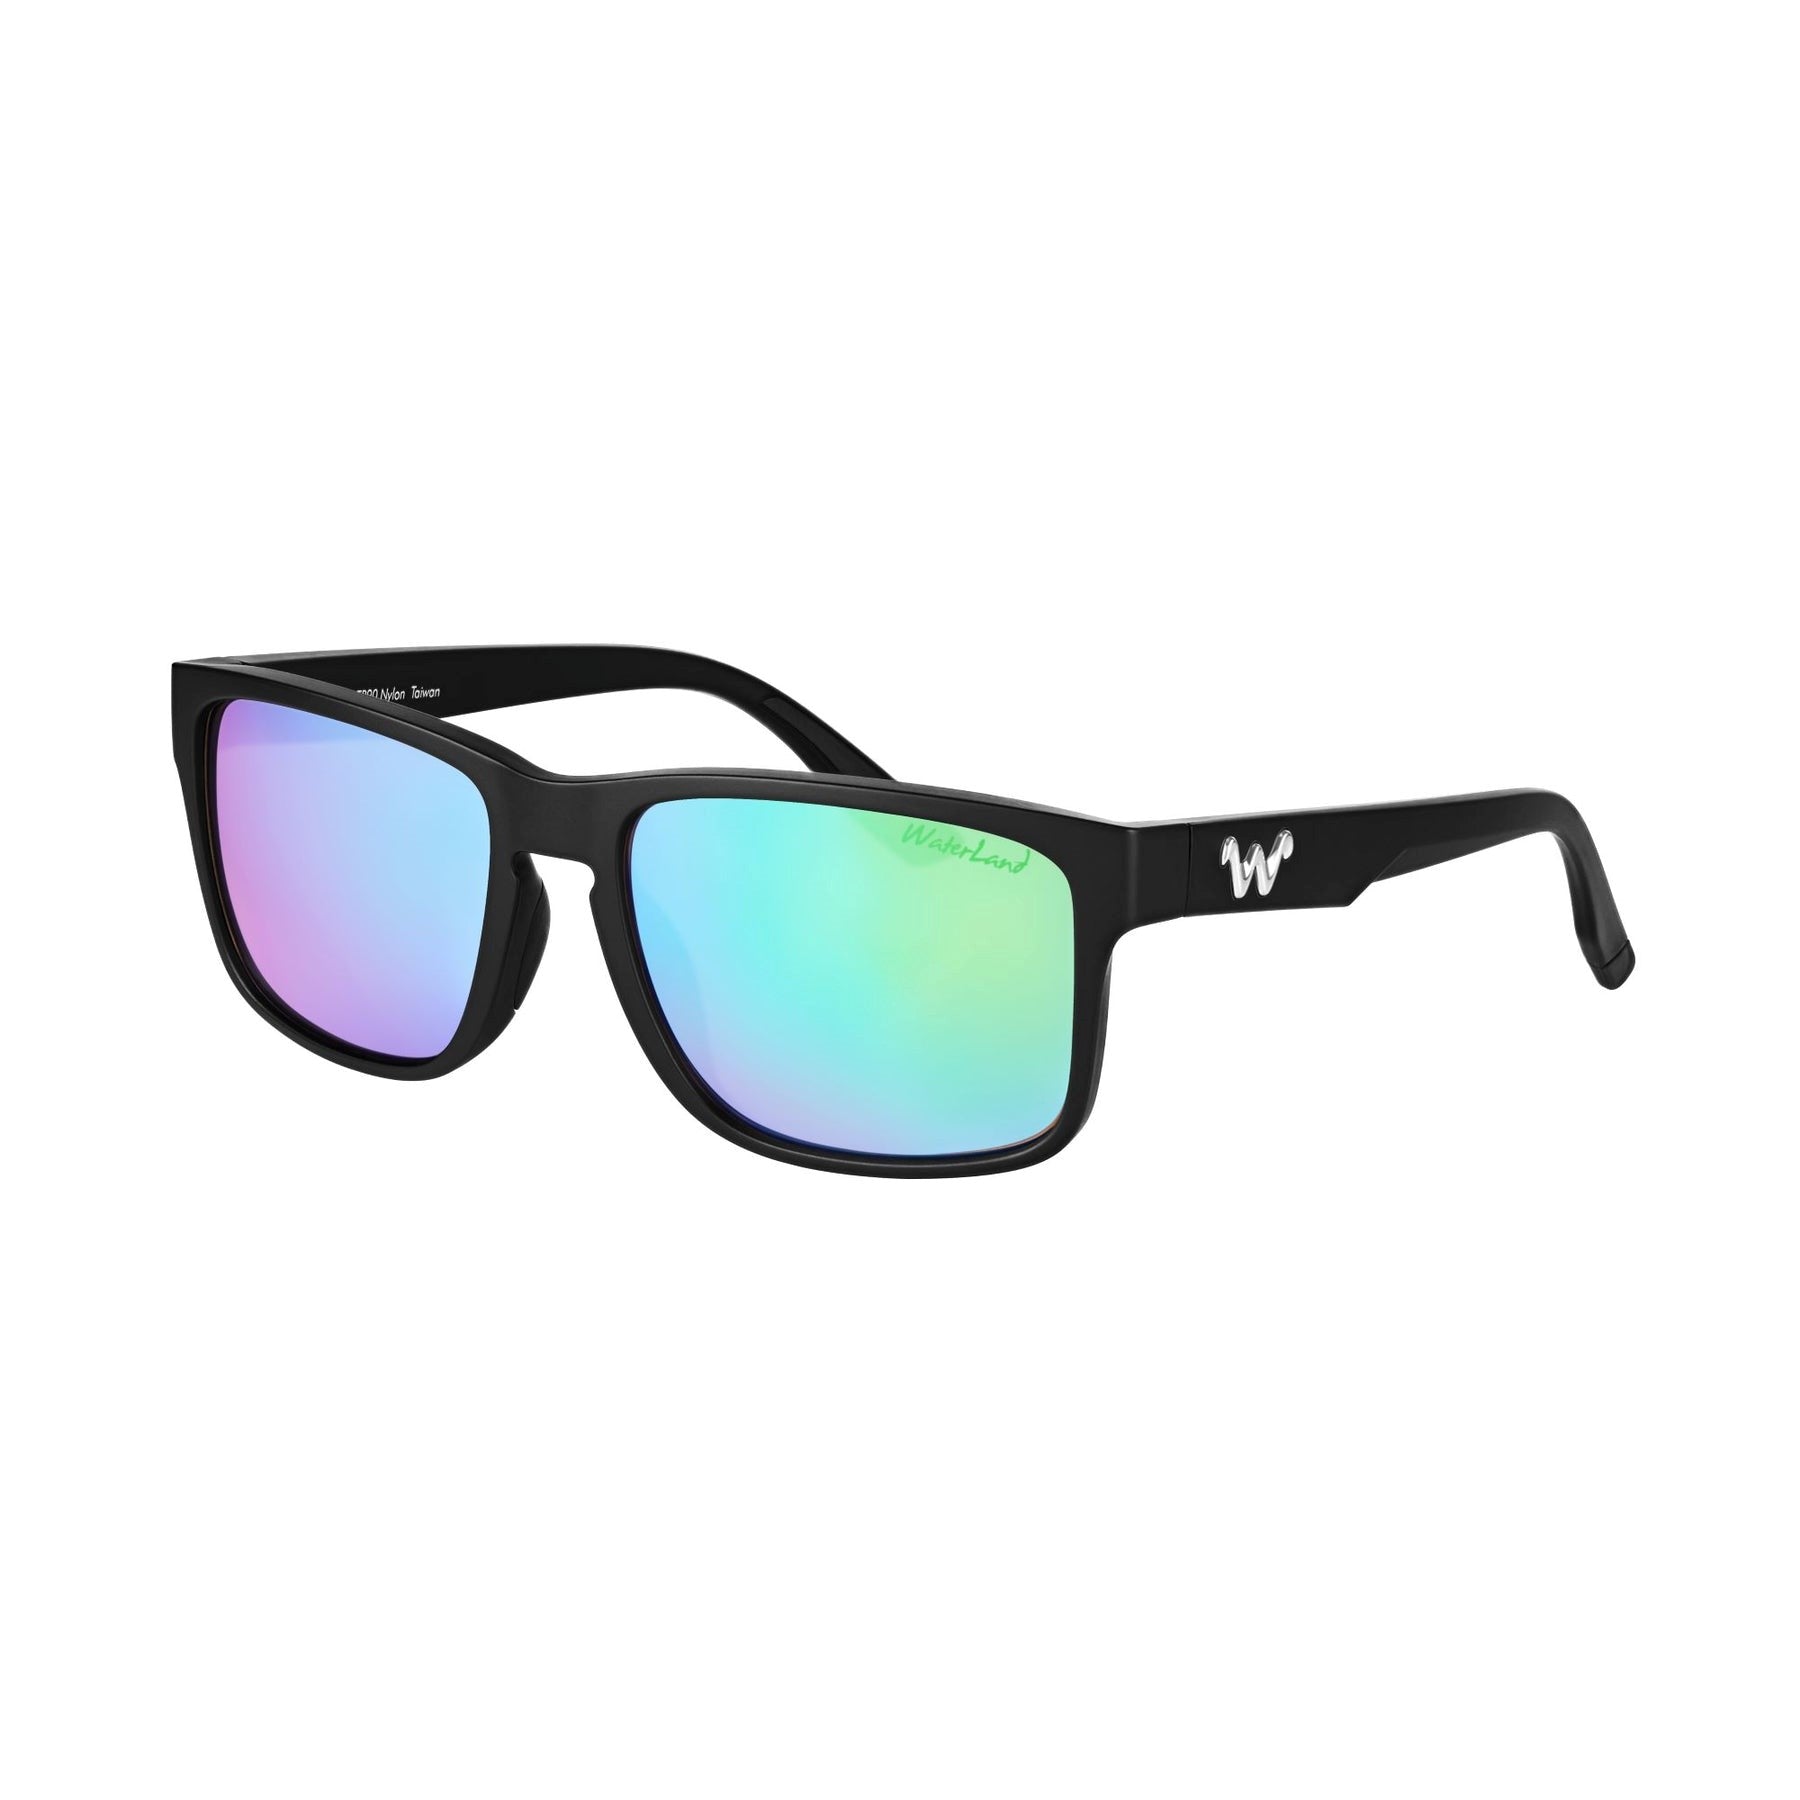 Waterland Sobro Polarized Sunglasses